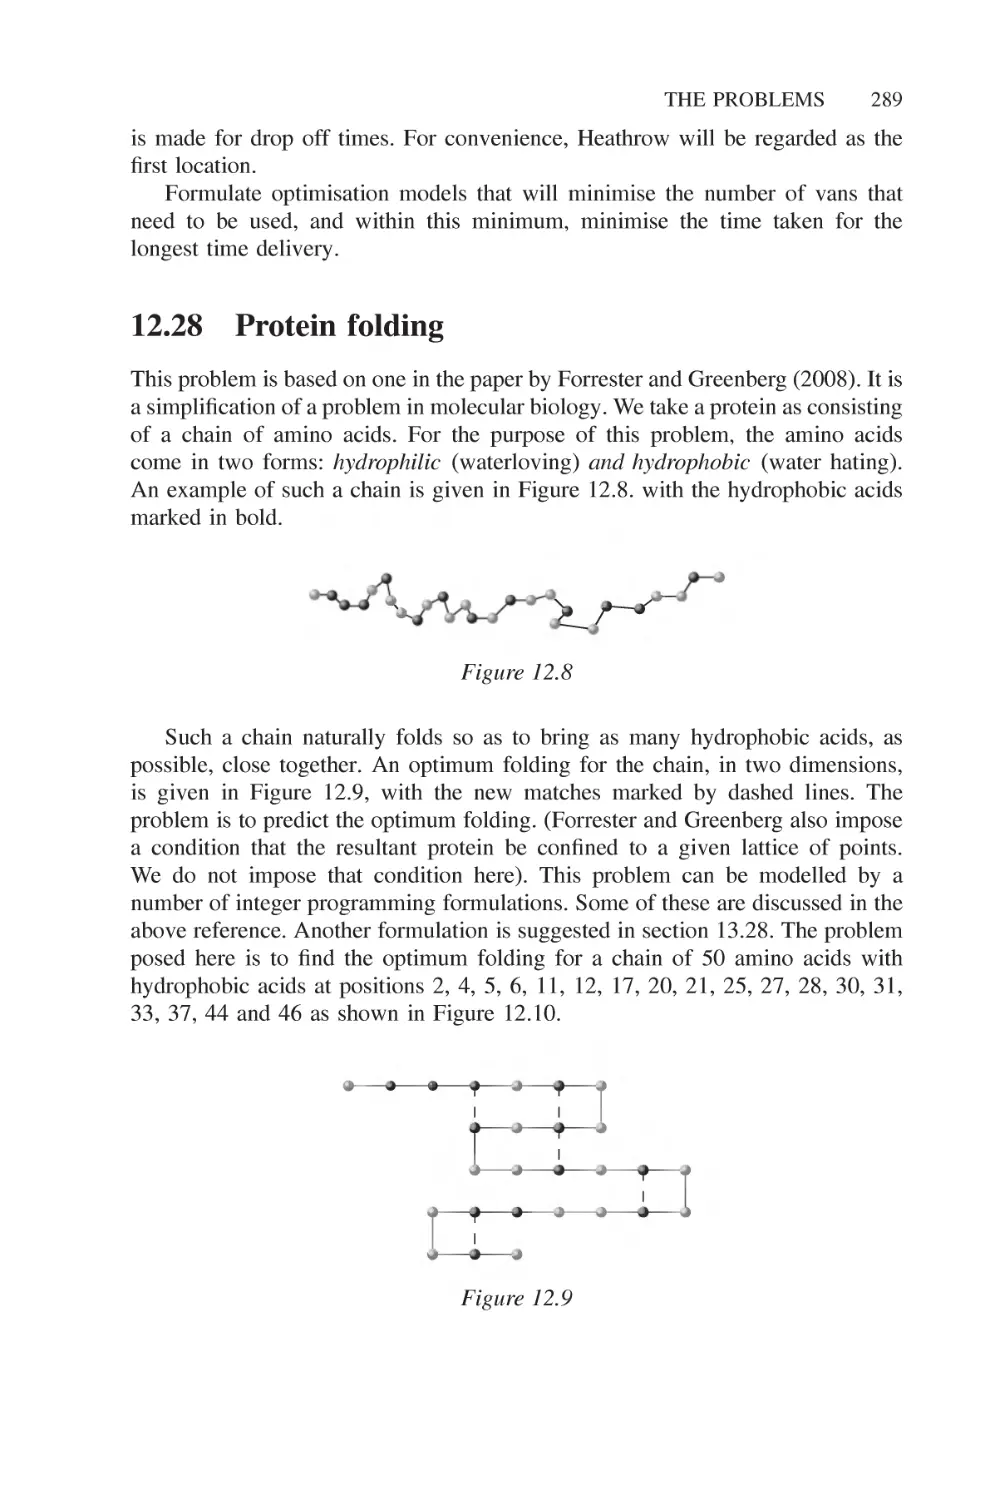 12.28 Protein folding